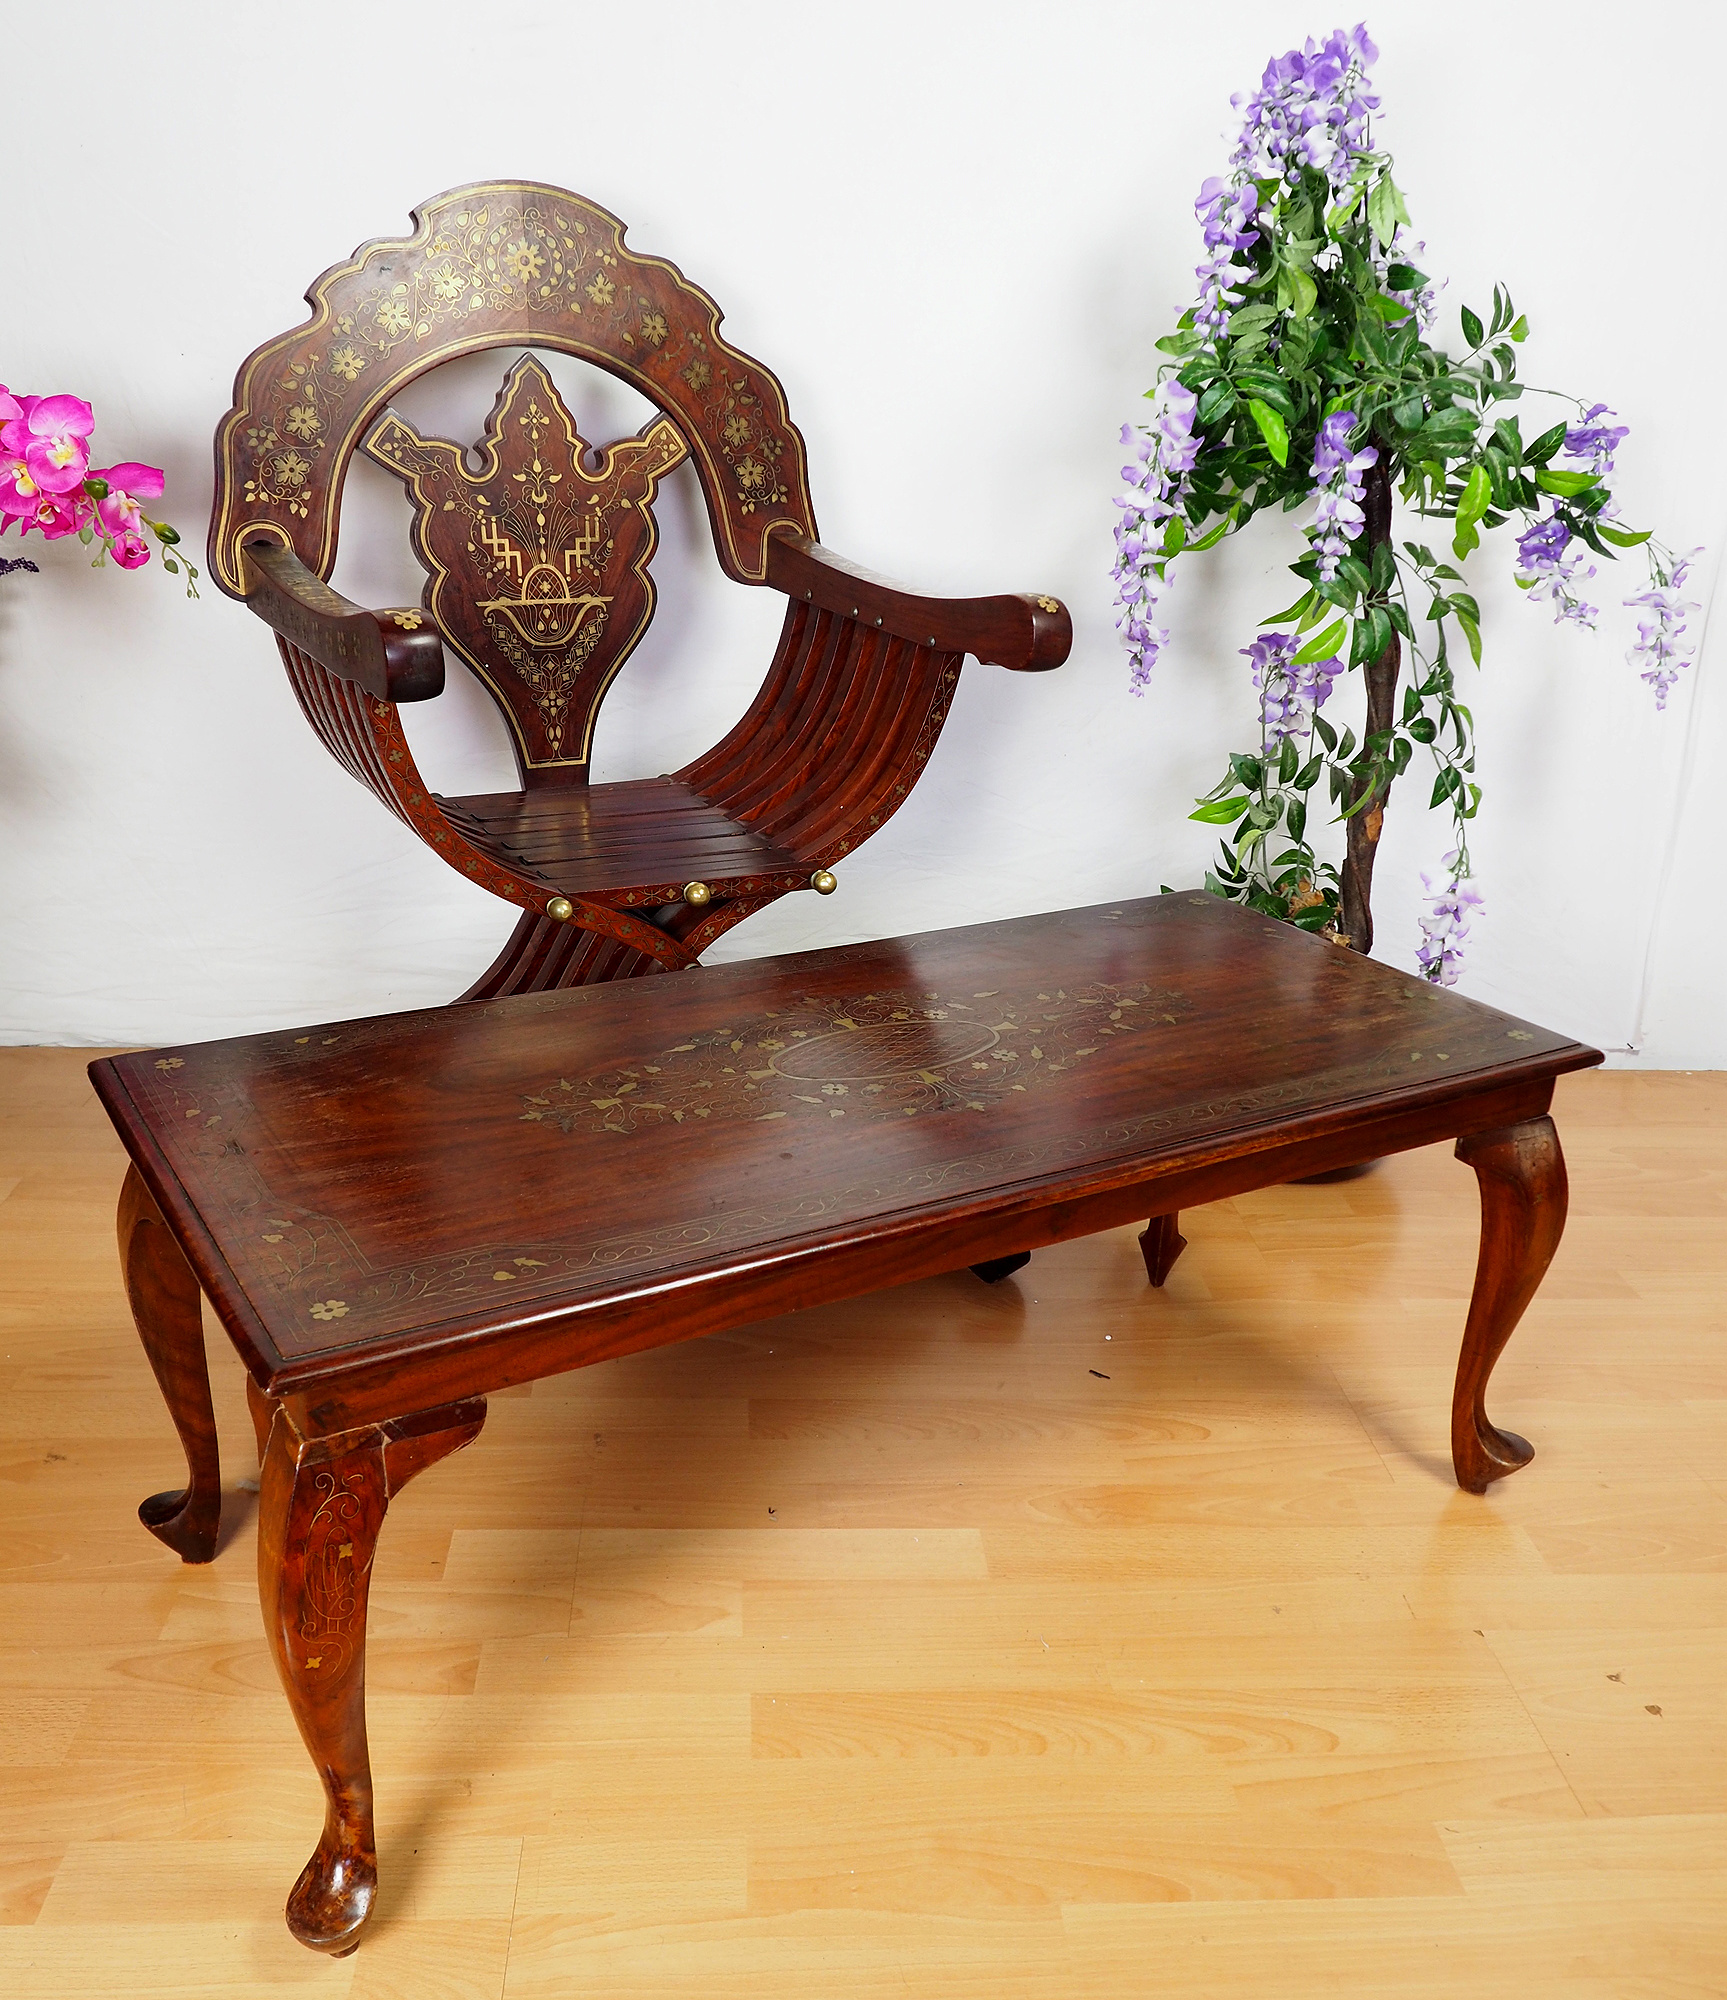 luxurious orient teak Savonarola chair and table